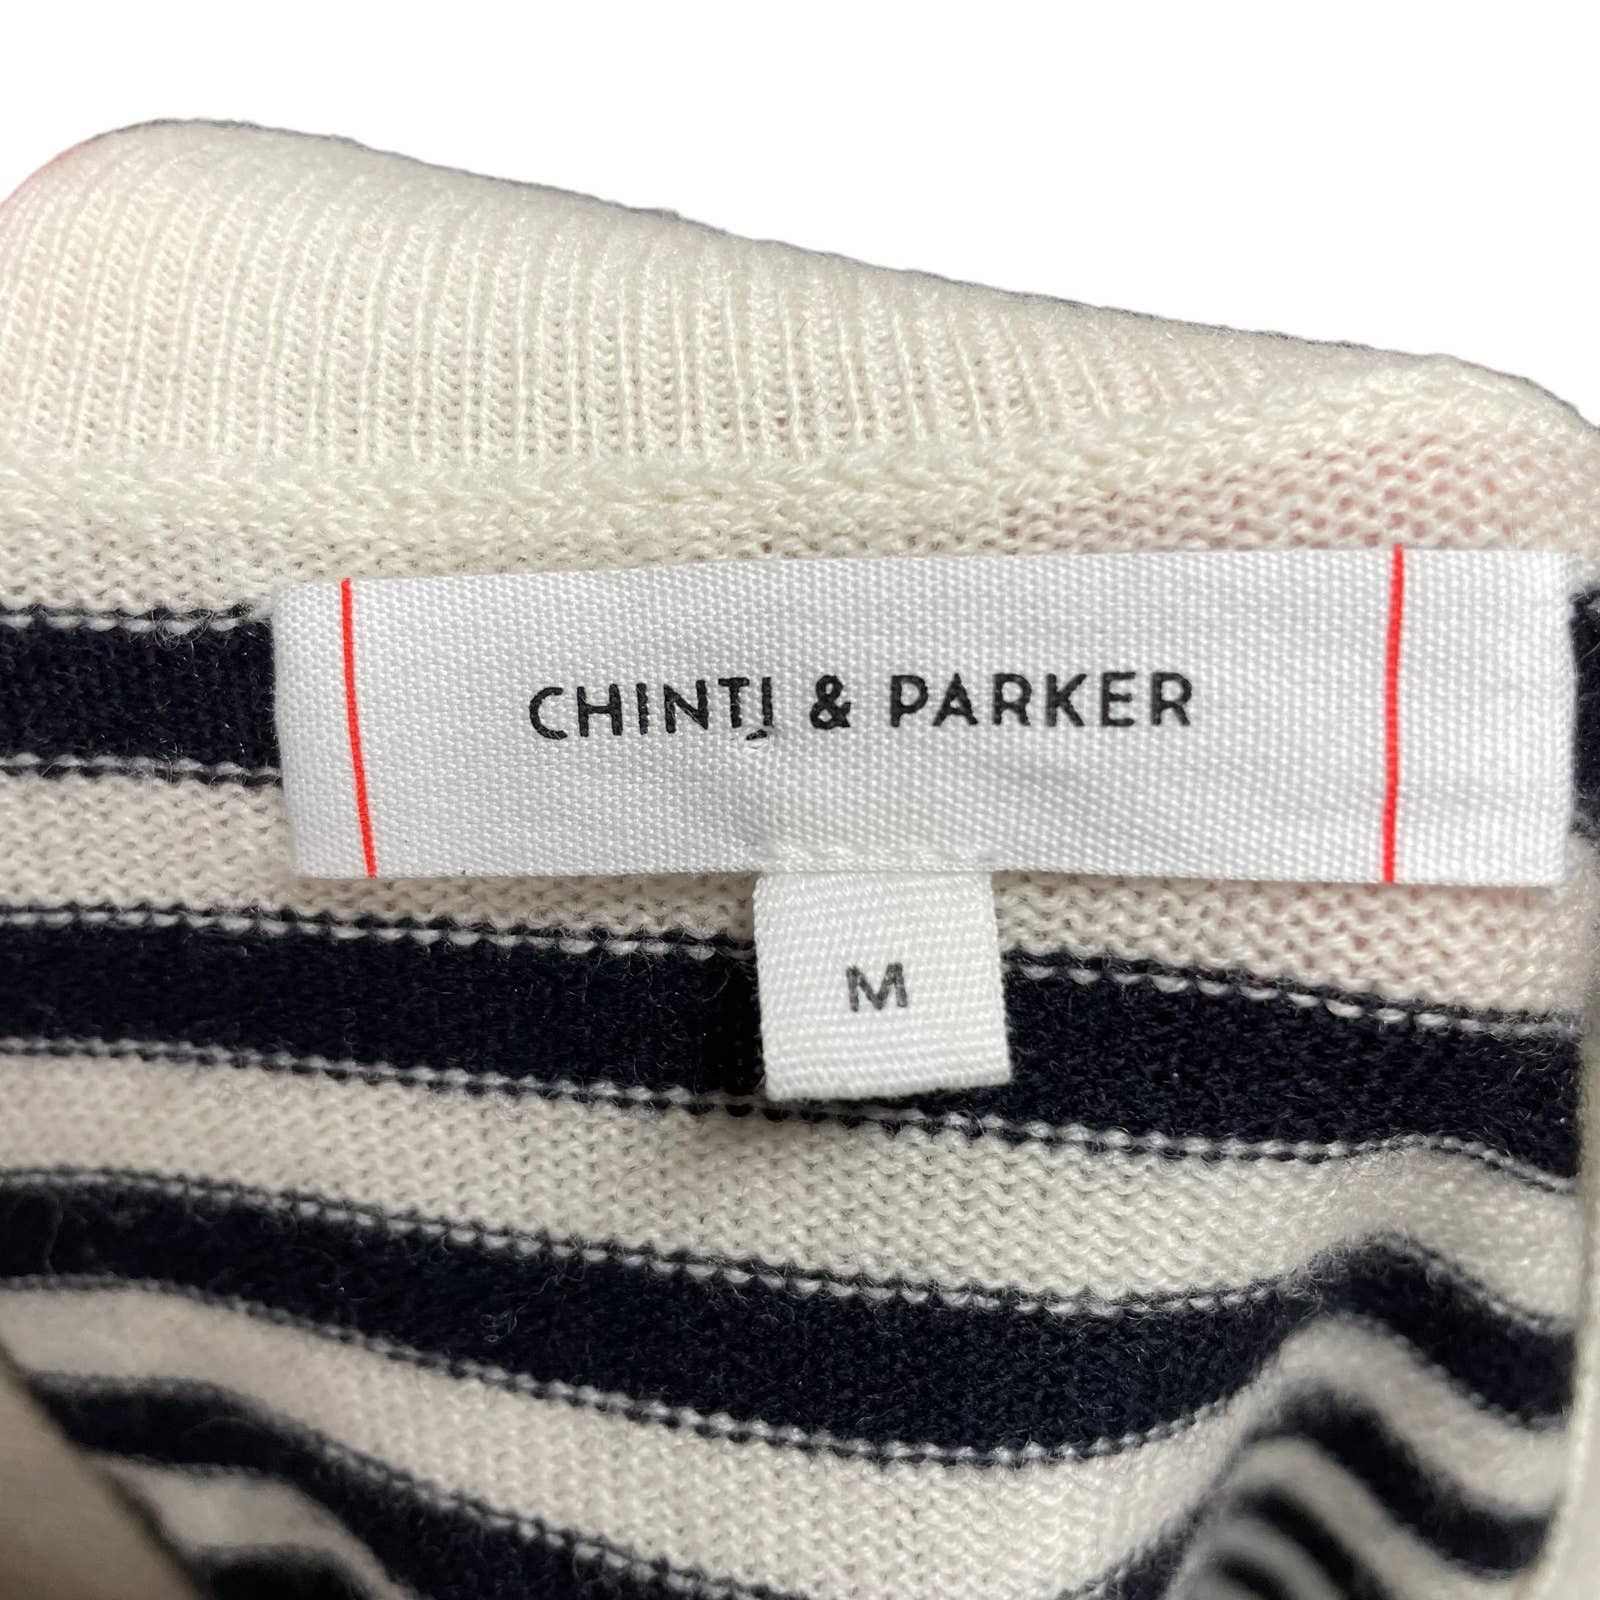 Chinti and Parker Chinti & Parker Navy Blue Cream Stripe Wool Cashmere Sweater Size M / US 6-8 / IT 42-44 - 8 Thumbnail